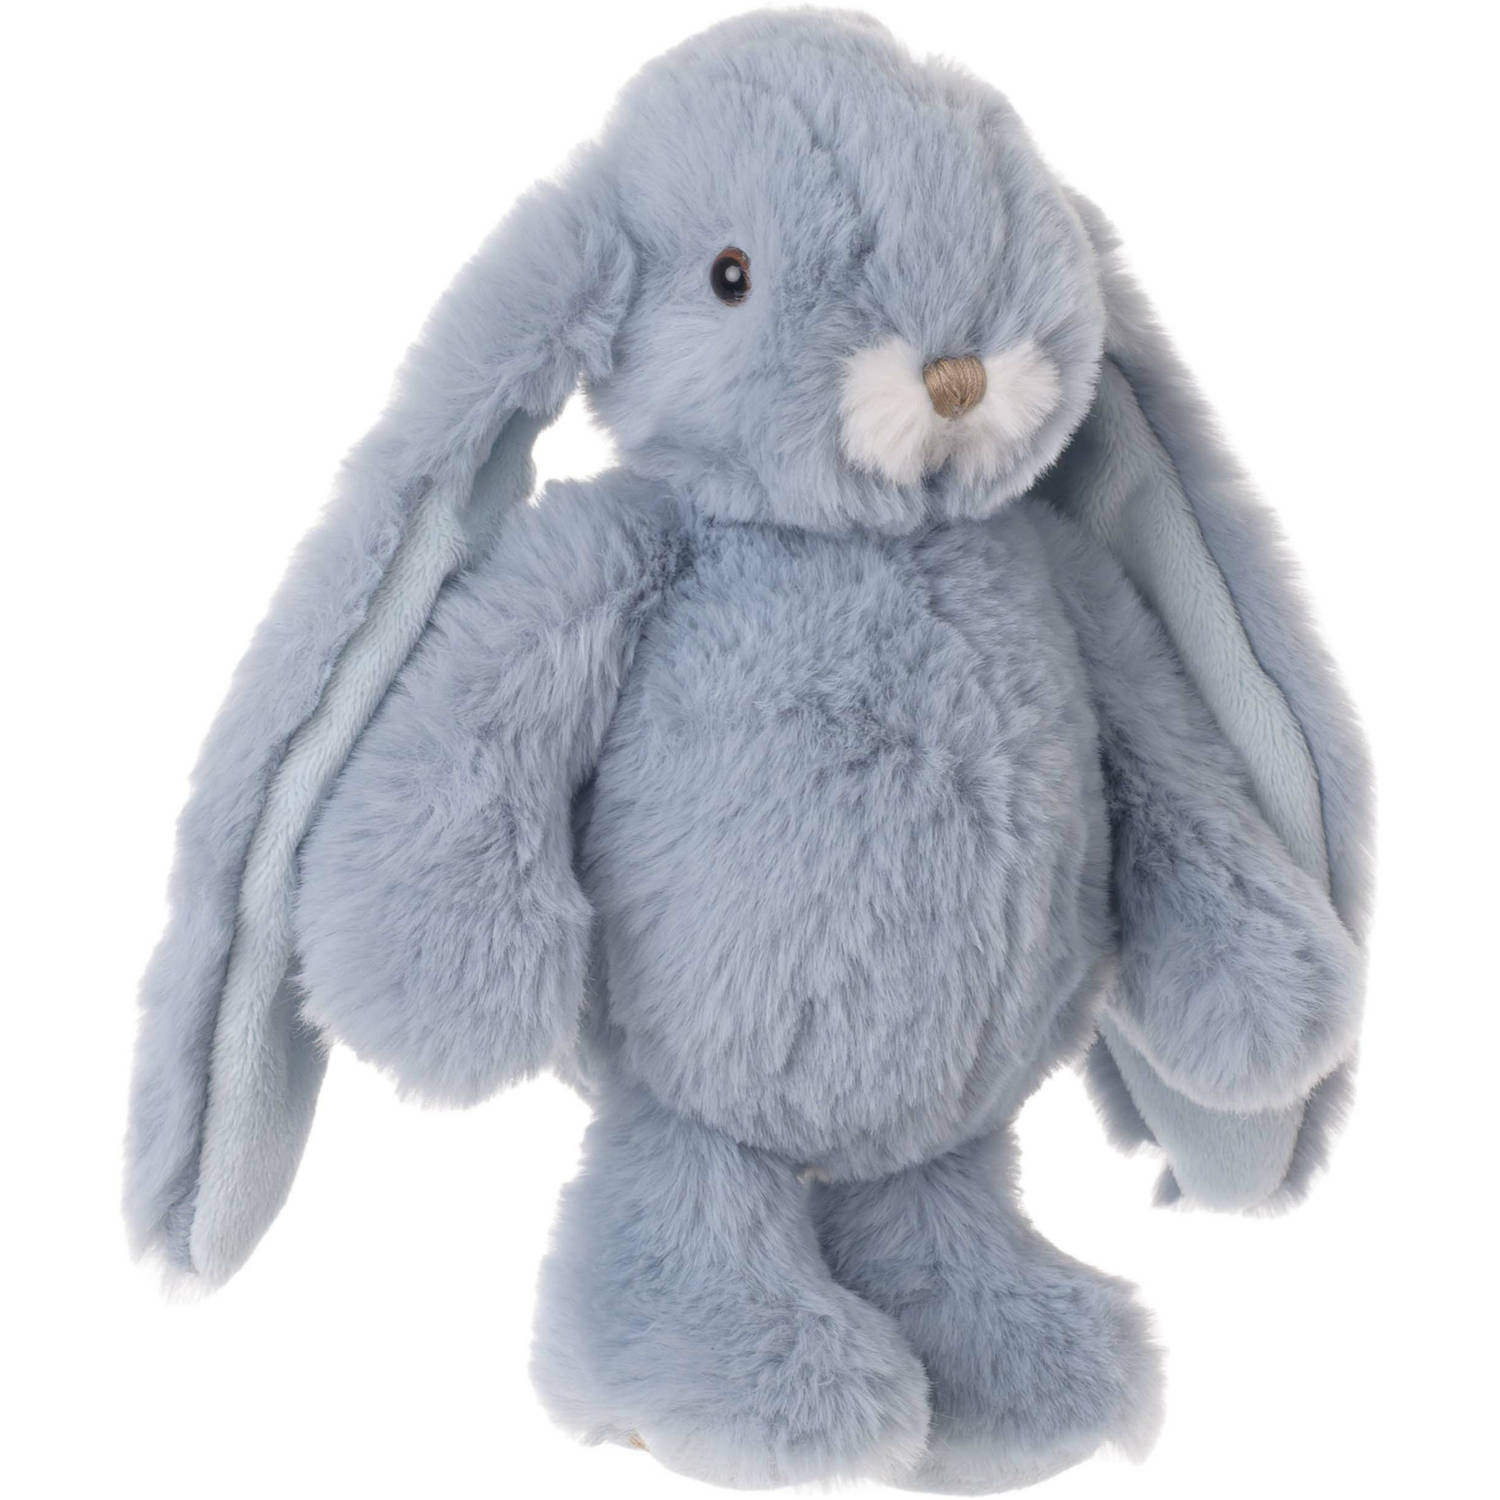 Bukowski pluche konijn knuffeldier - lichtblauw - staand - 22 cm - Luxe kwaliteit knuffels